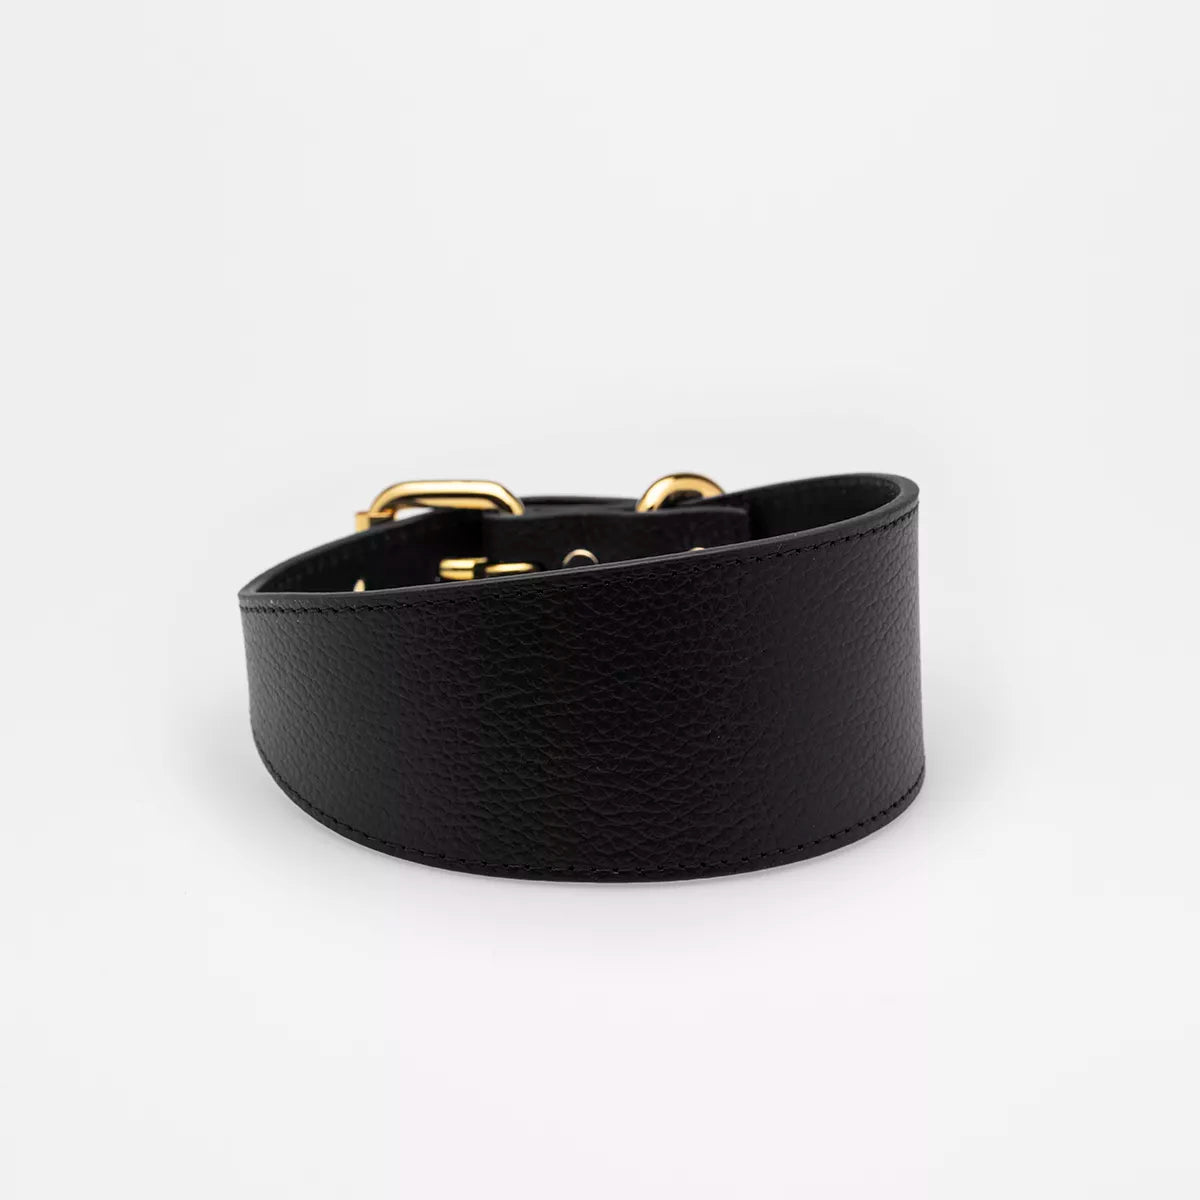 Black vegan leather collar size M